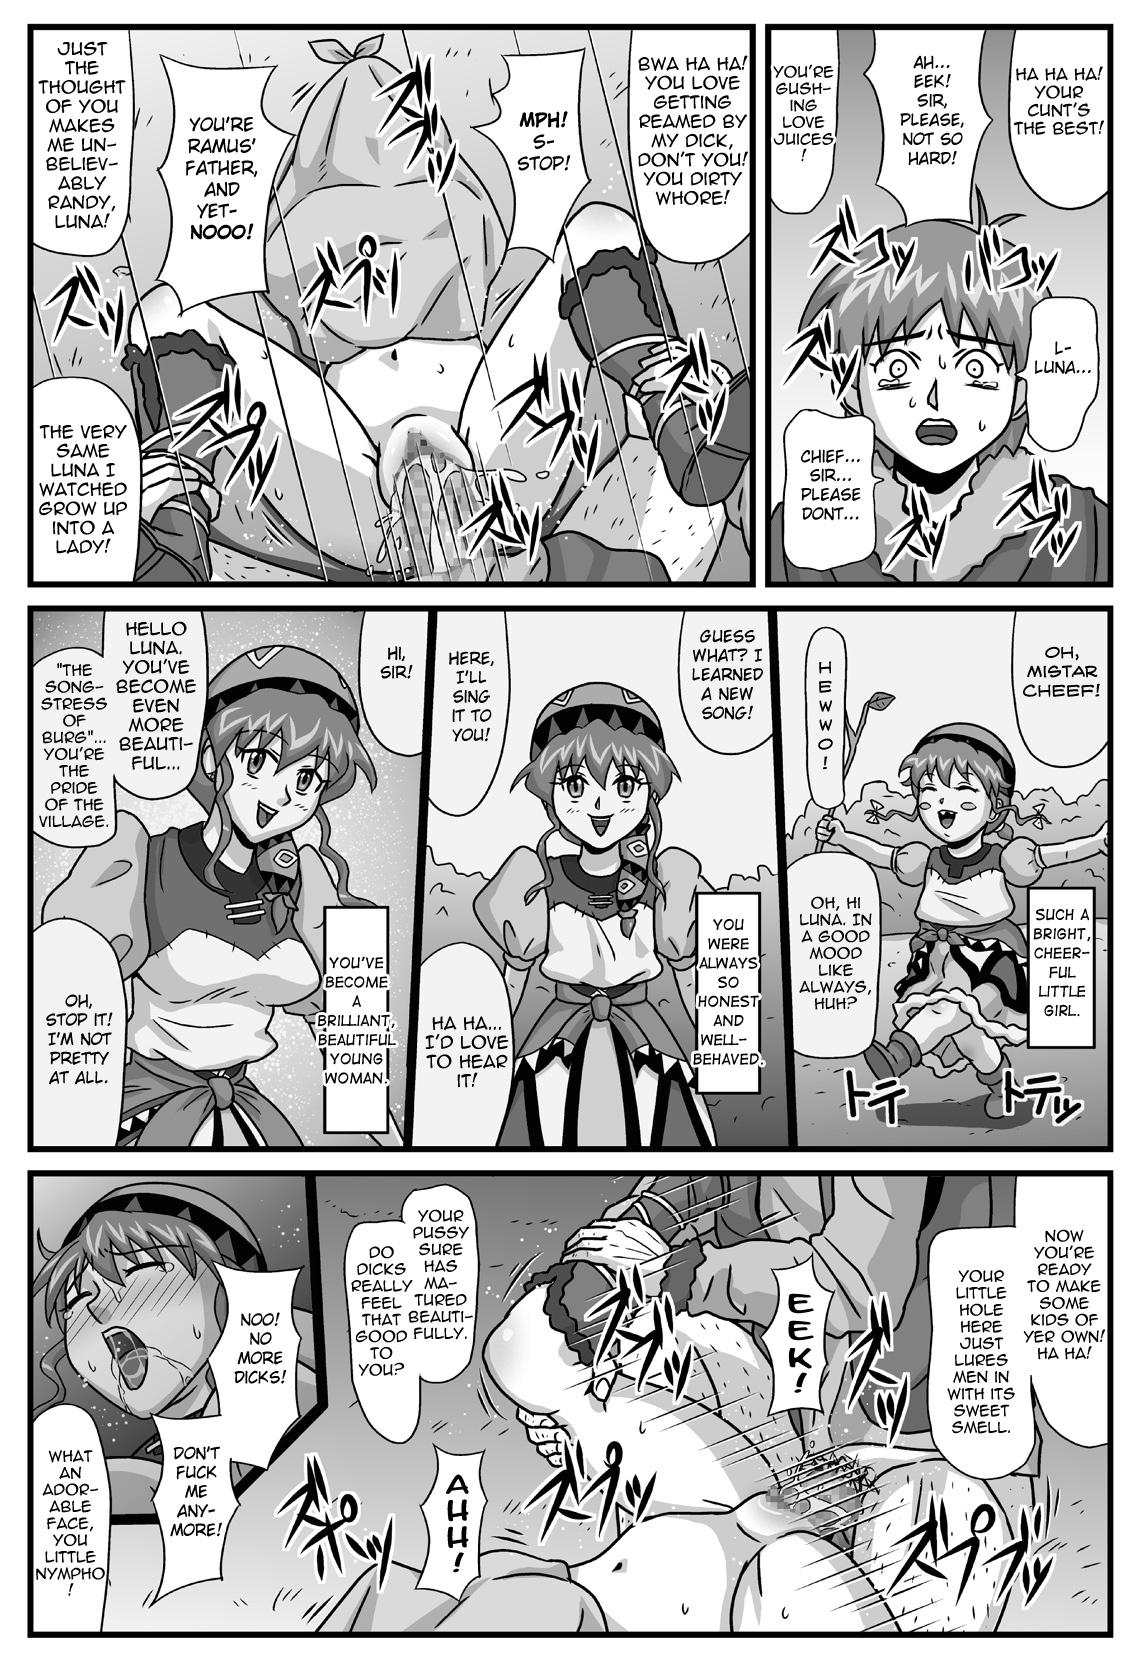 Strap On The Cumdumpster Princess of Burg 02 - Lunar silver star story Tgirl - Page 9